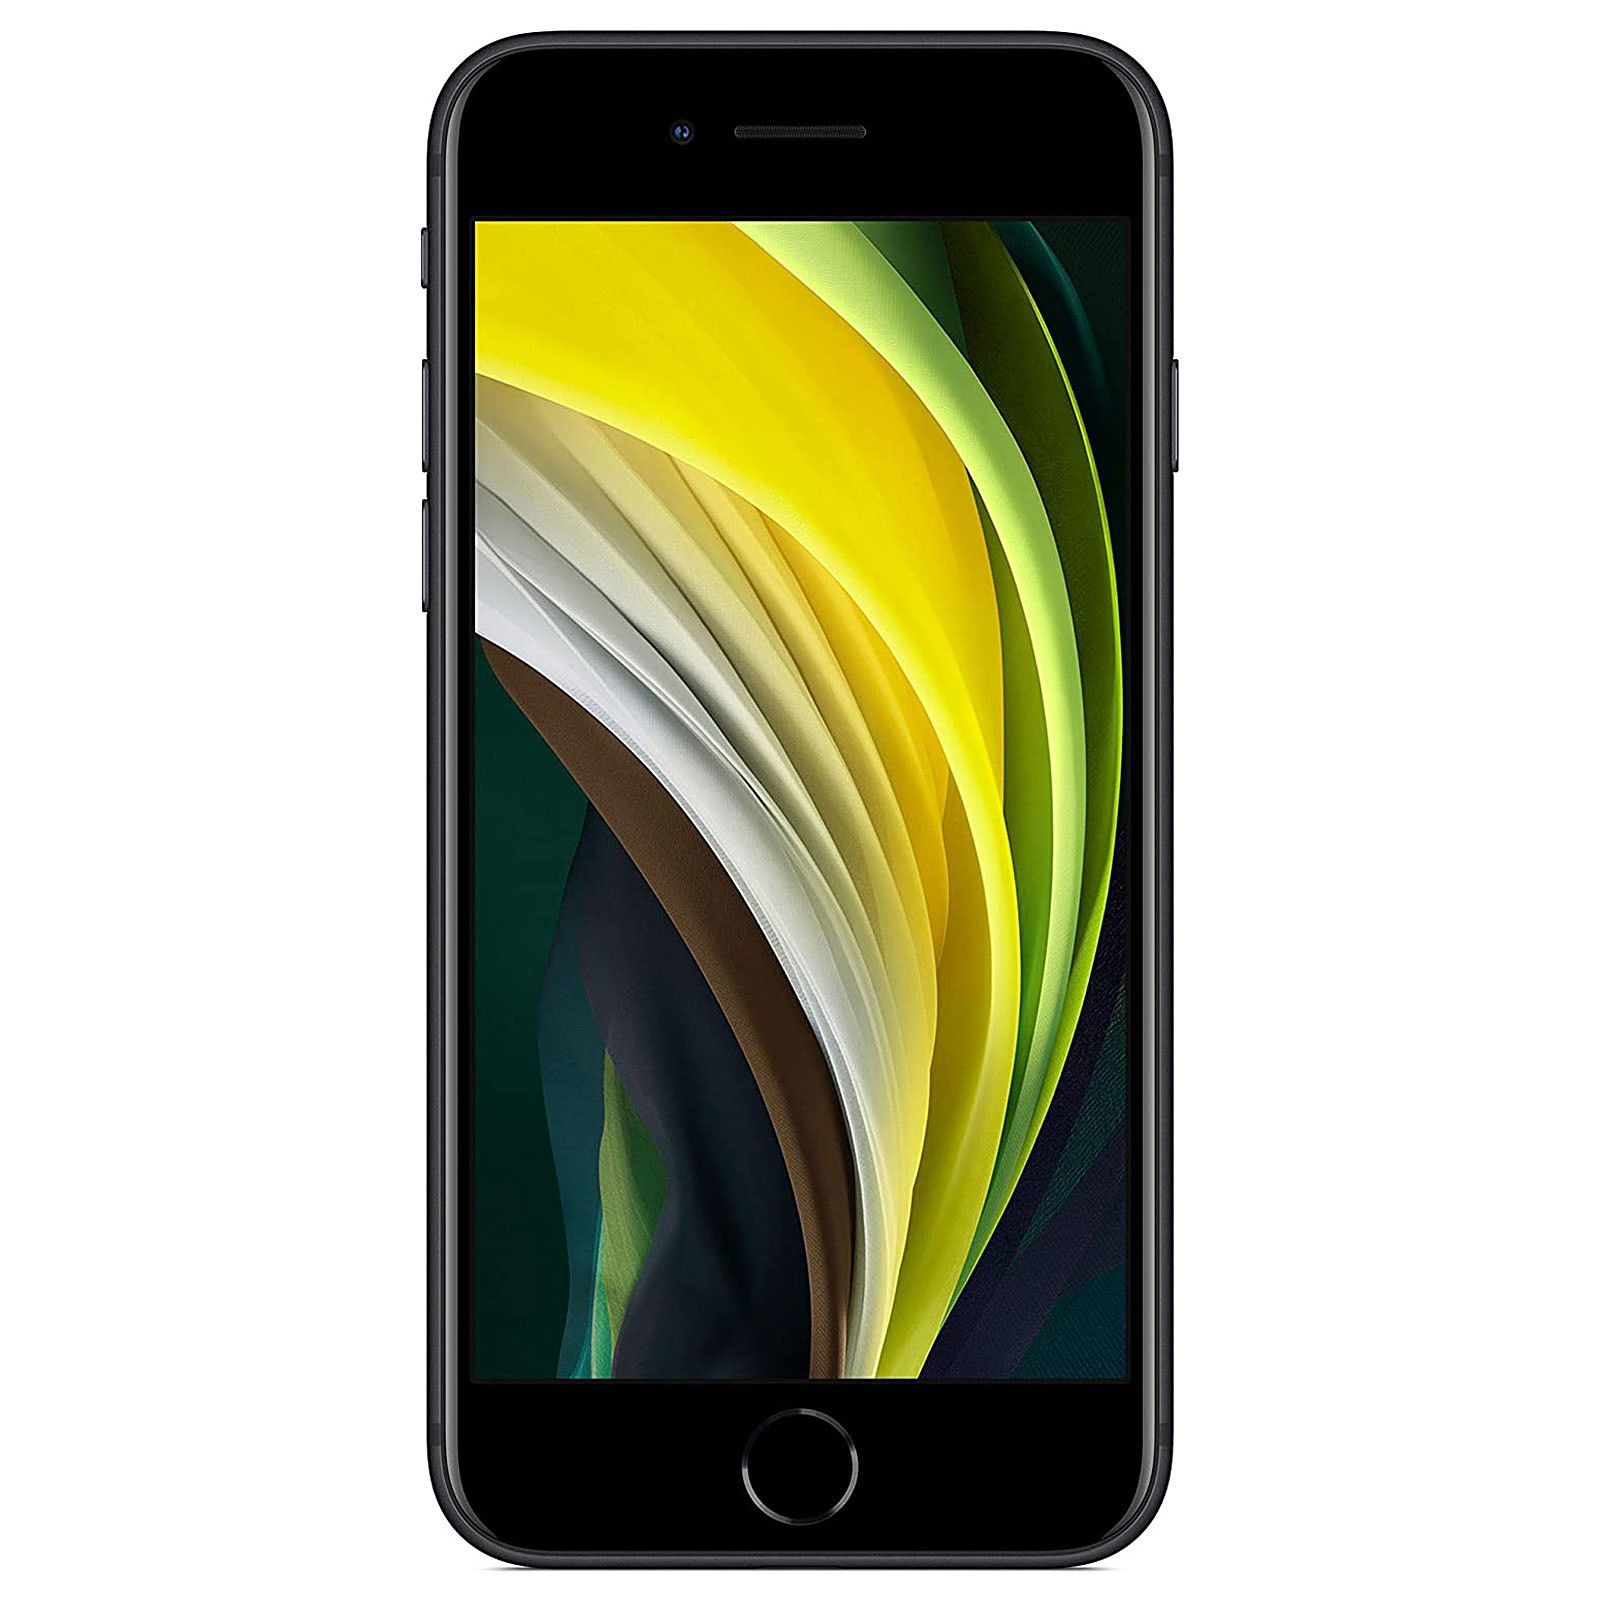 GB iPhone 2020 256 GB (*) schwarz APPLE REFURBISHED 256 SE